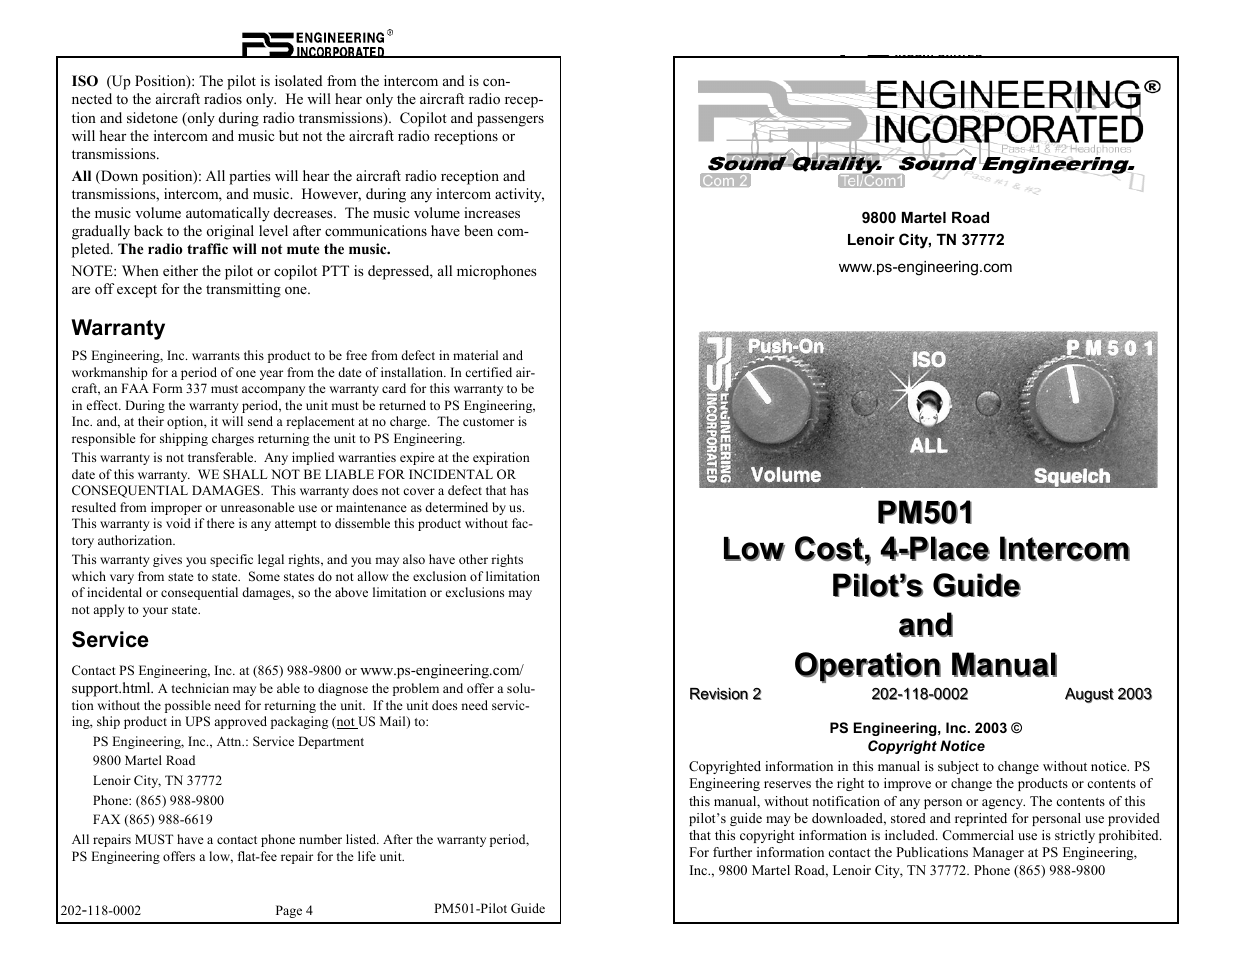 PM500EX Pilot’s Guide